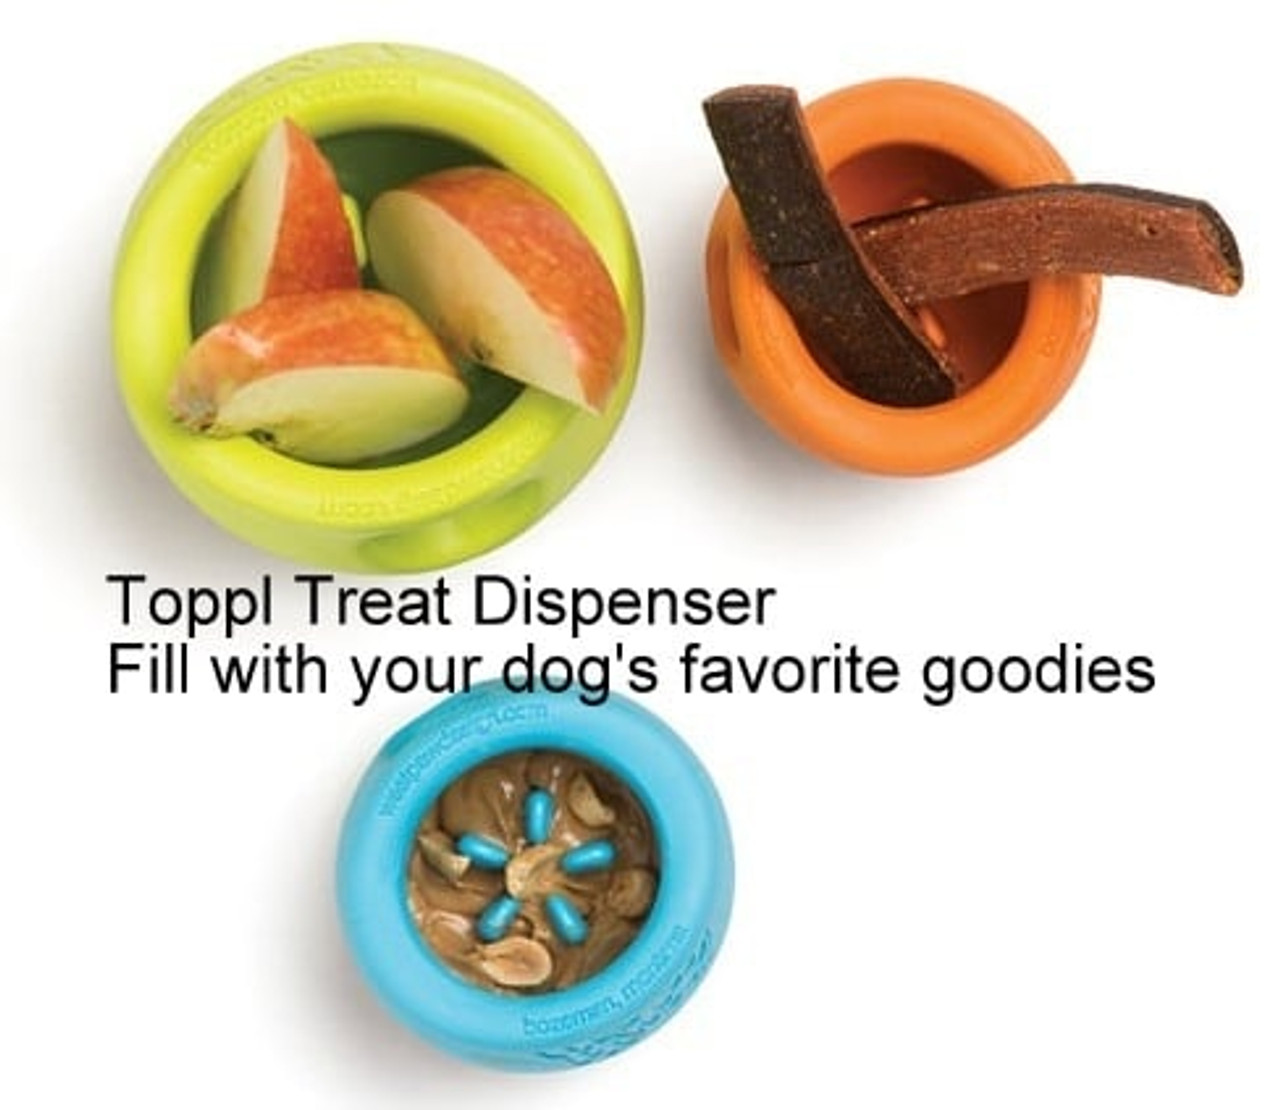 WEST PAW Zogoflex Toppl Tough Treat Dispensing Dog Chew Toy, Tangerine,  Small 